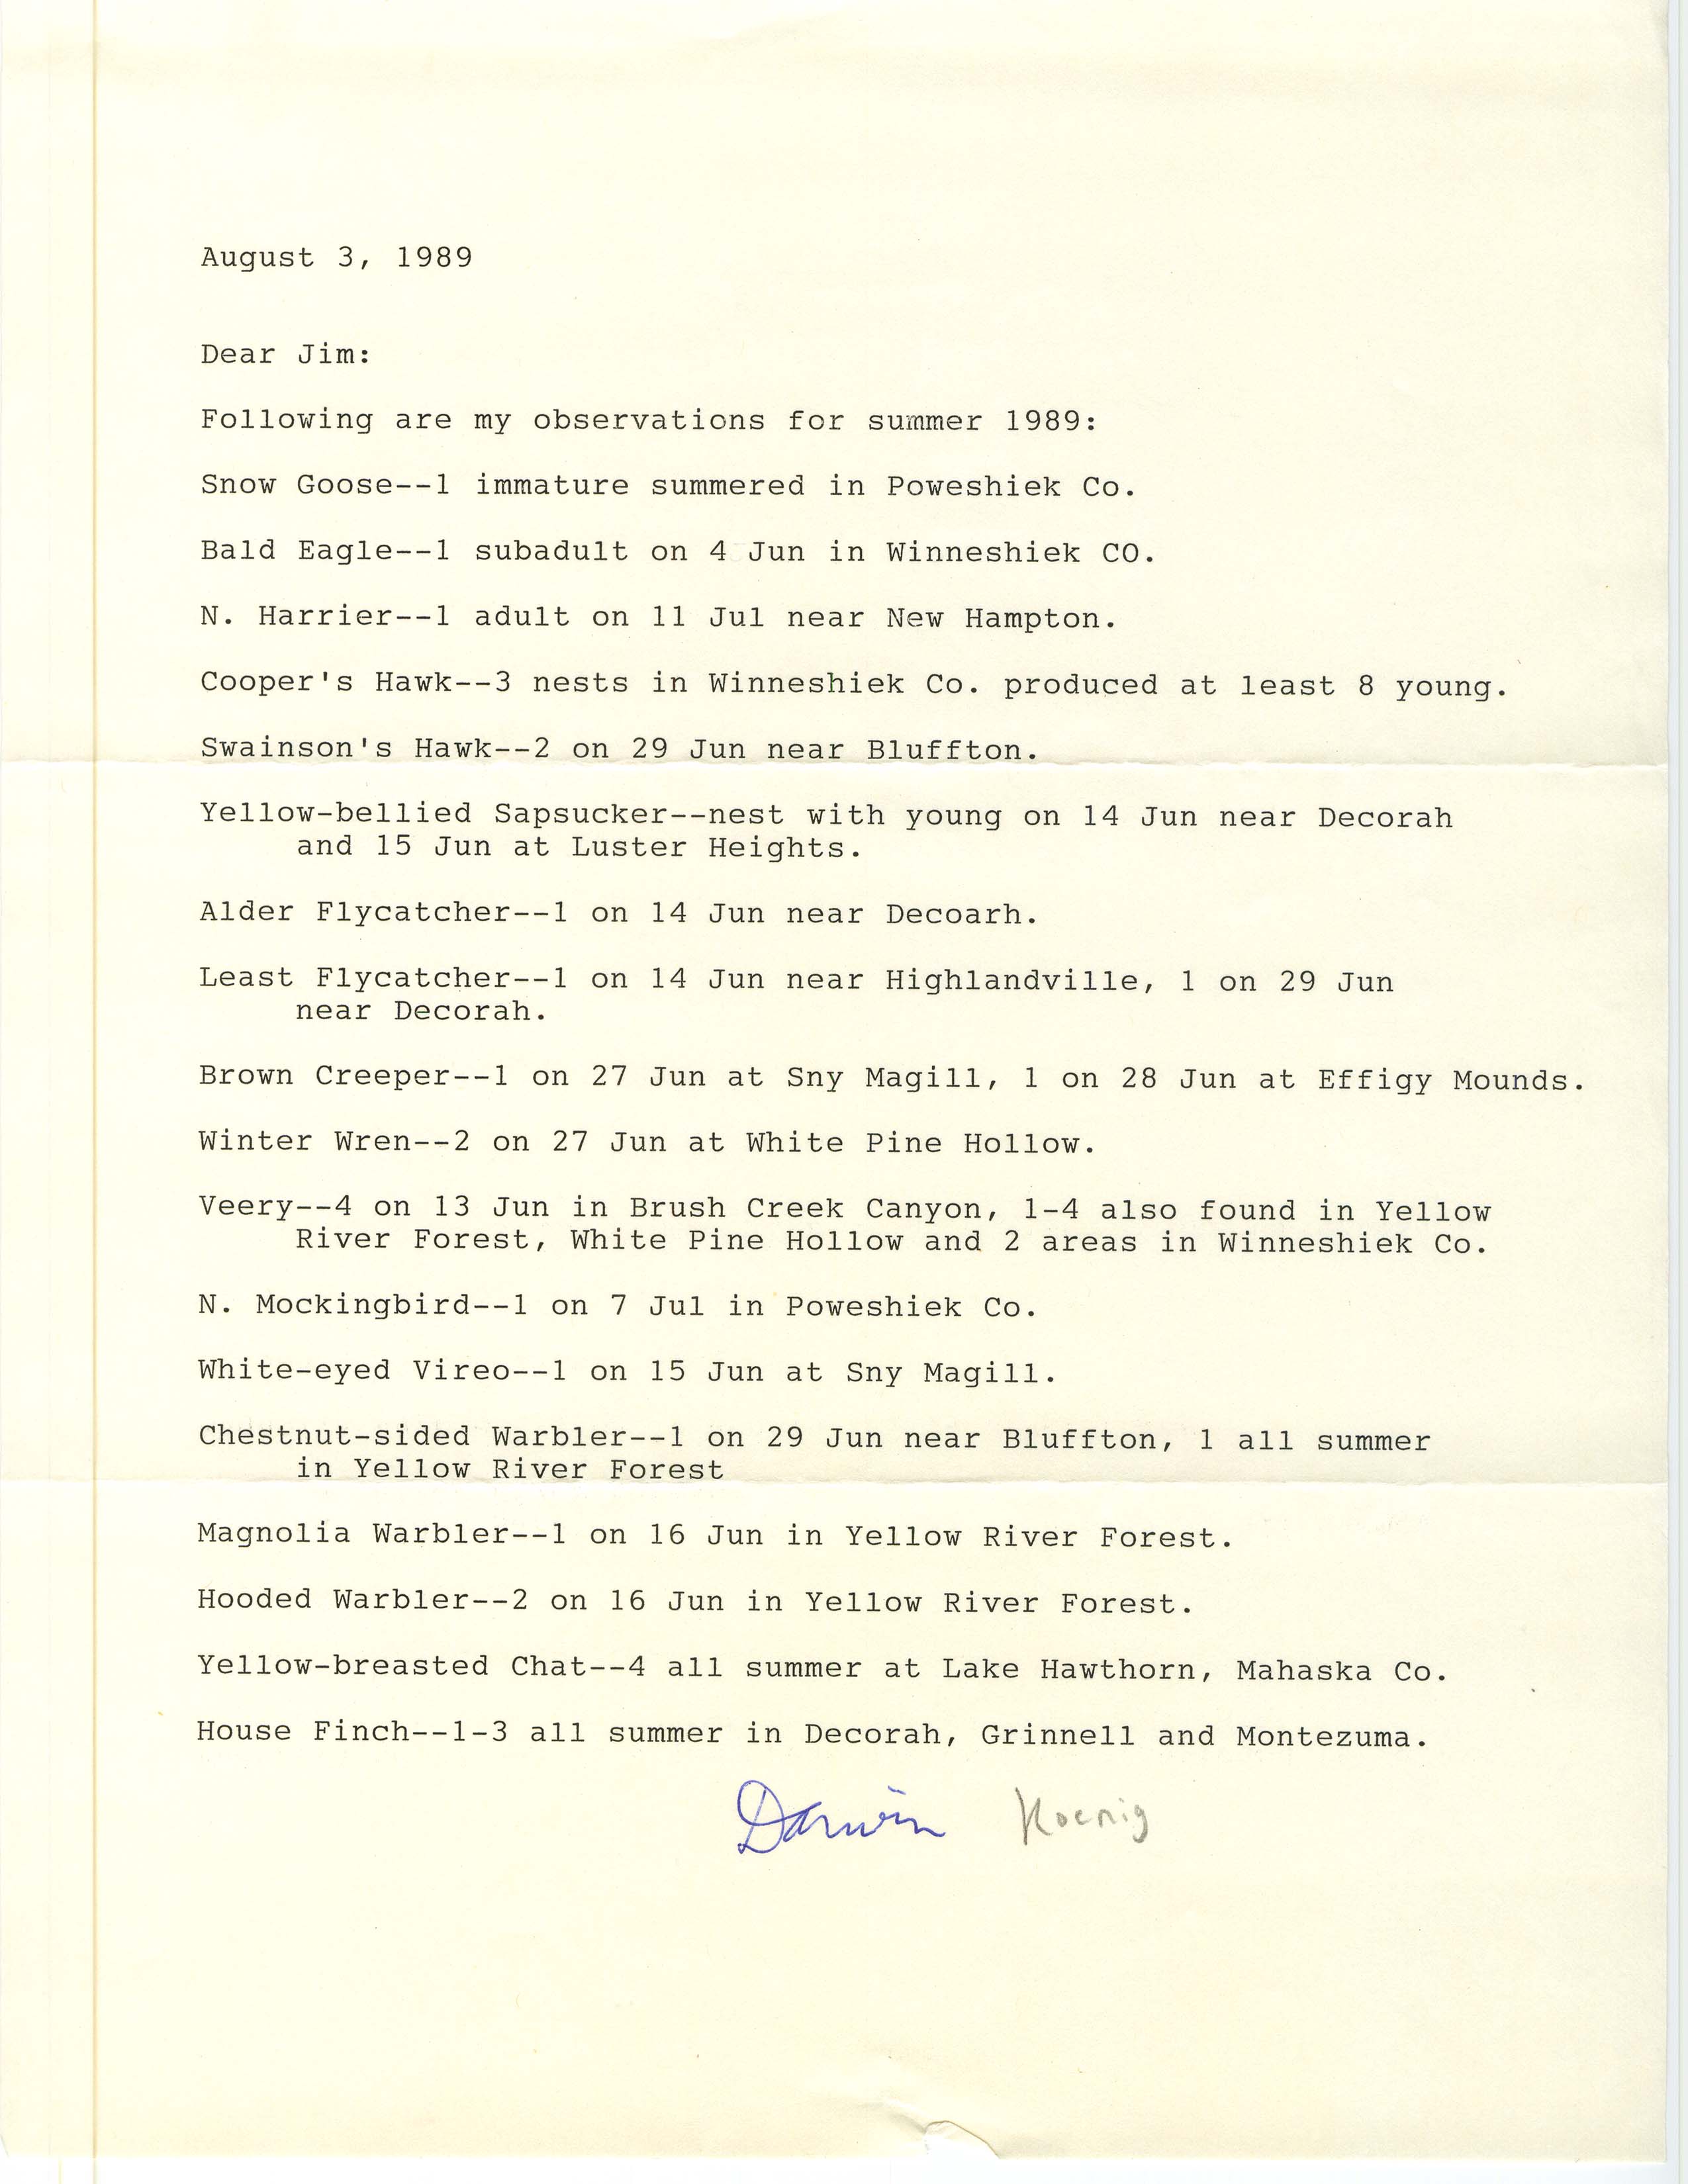 Darwin Koenig letter to James J. Dinsmore regarding summer bird sightings, August 3, 1989